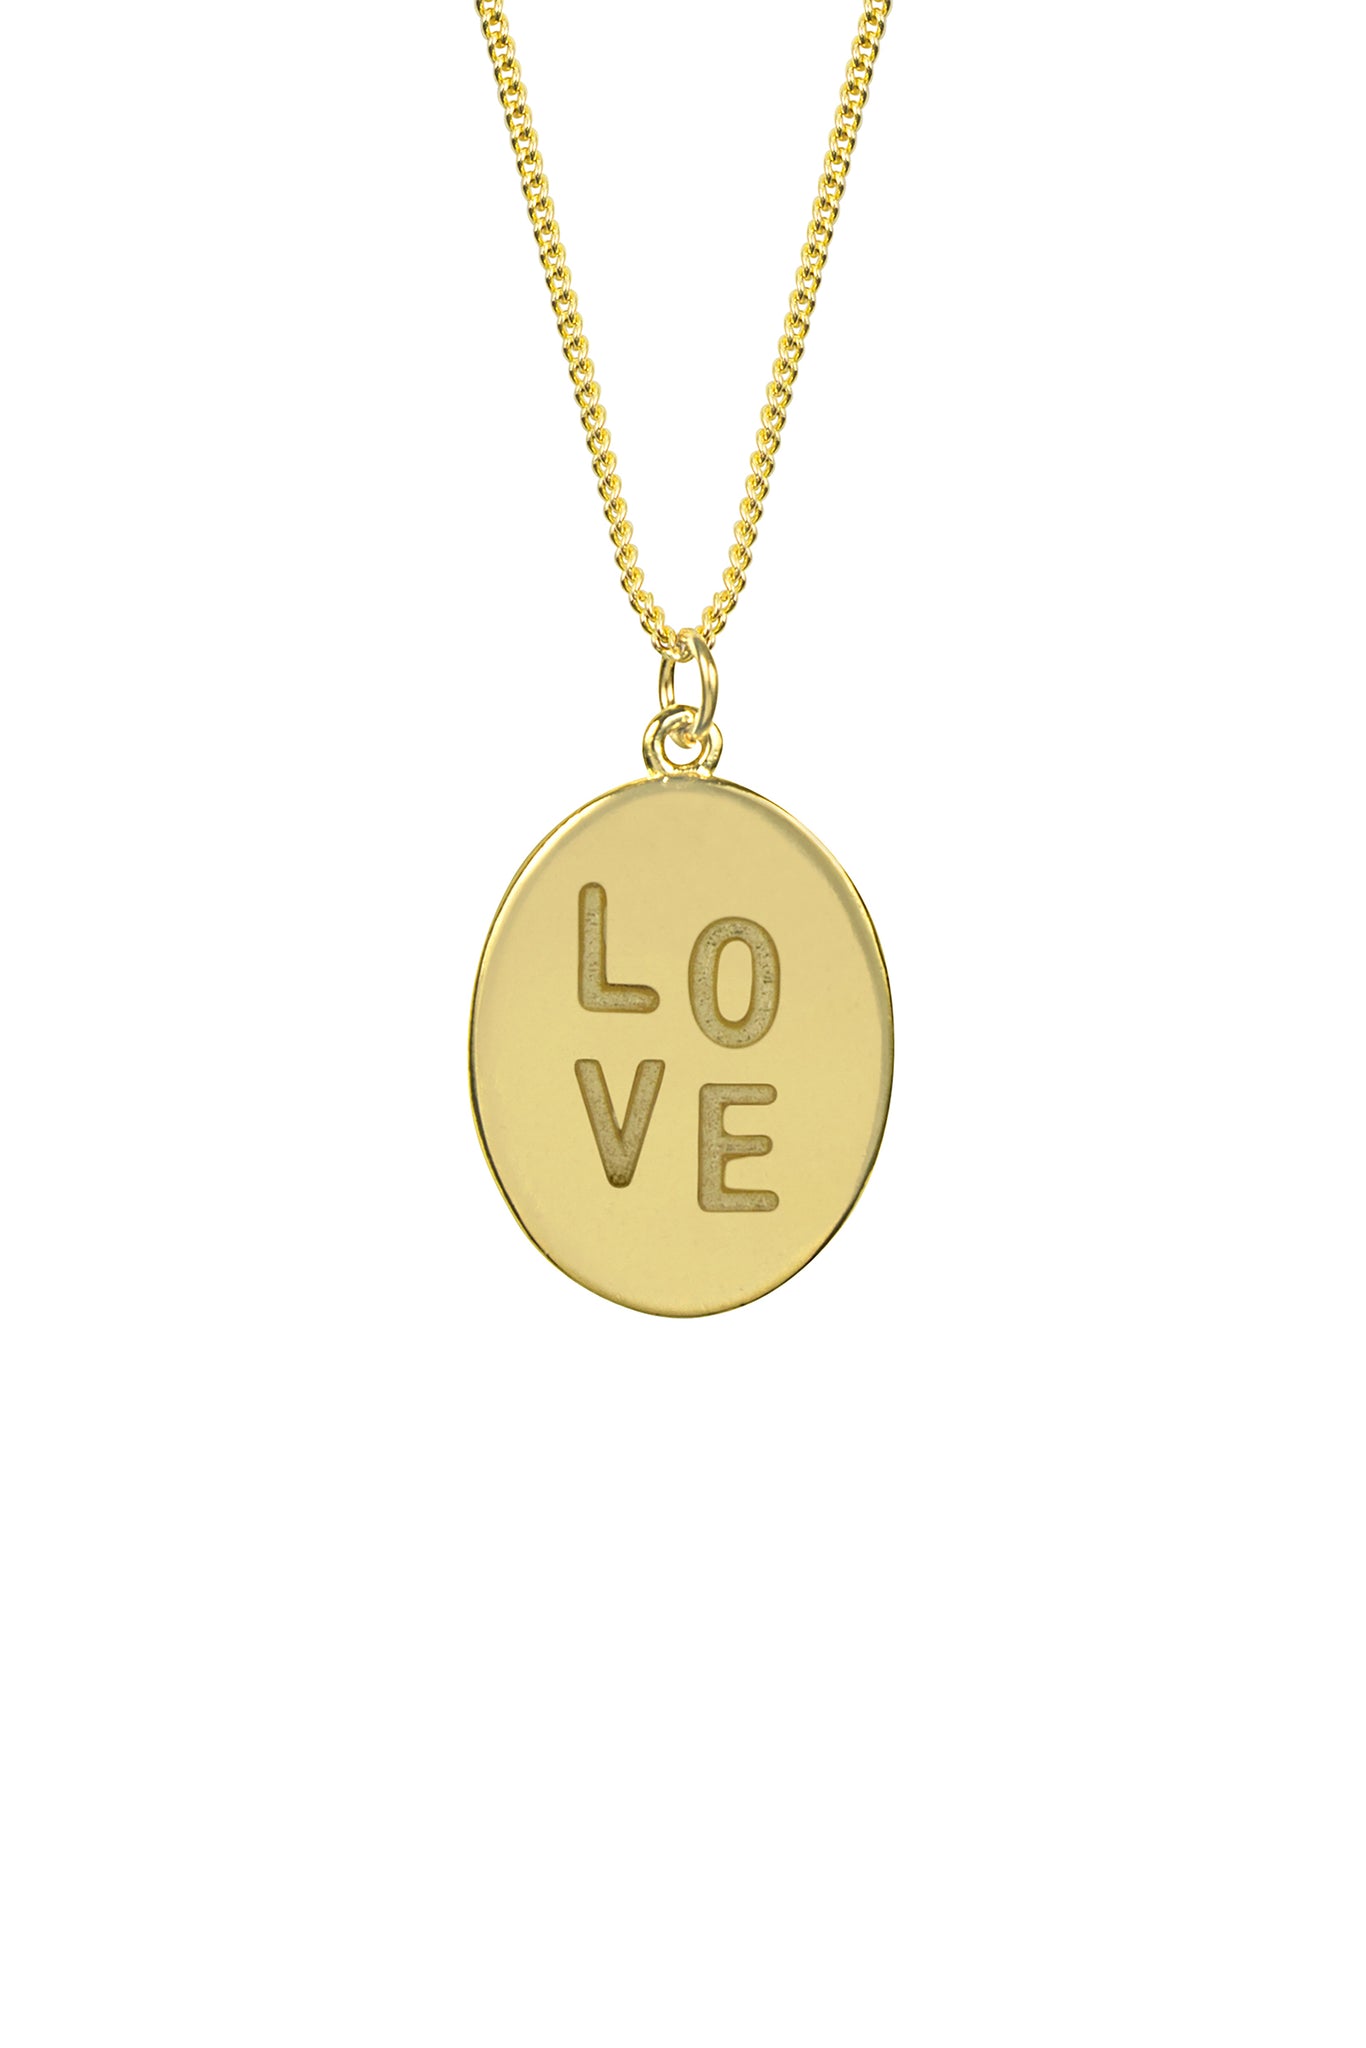 Love Charm Necklace, Katie Dean Jewelry